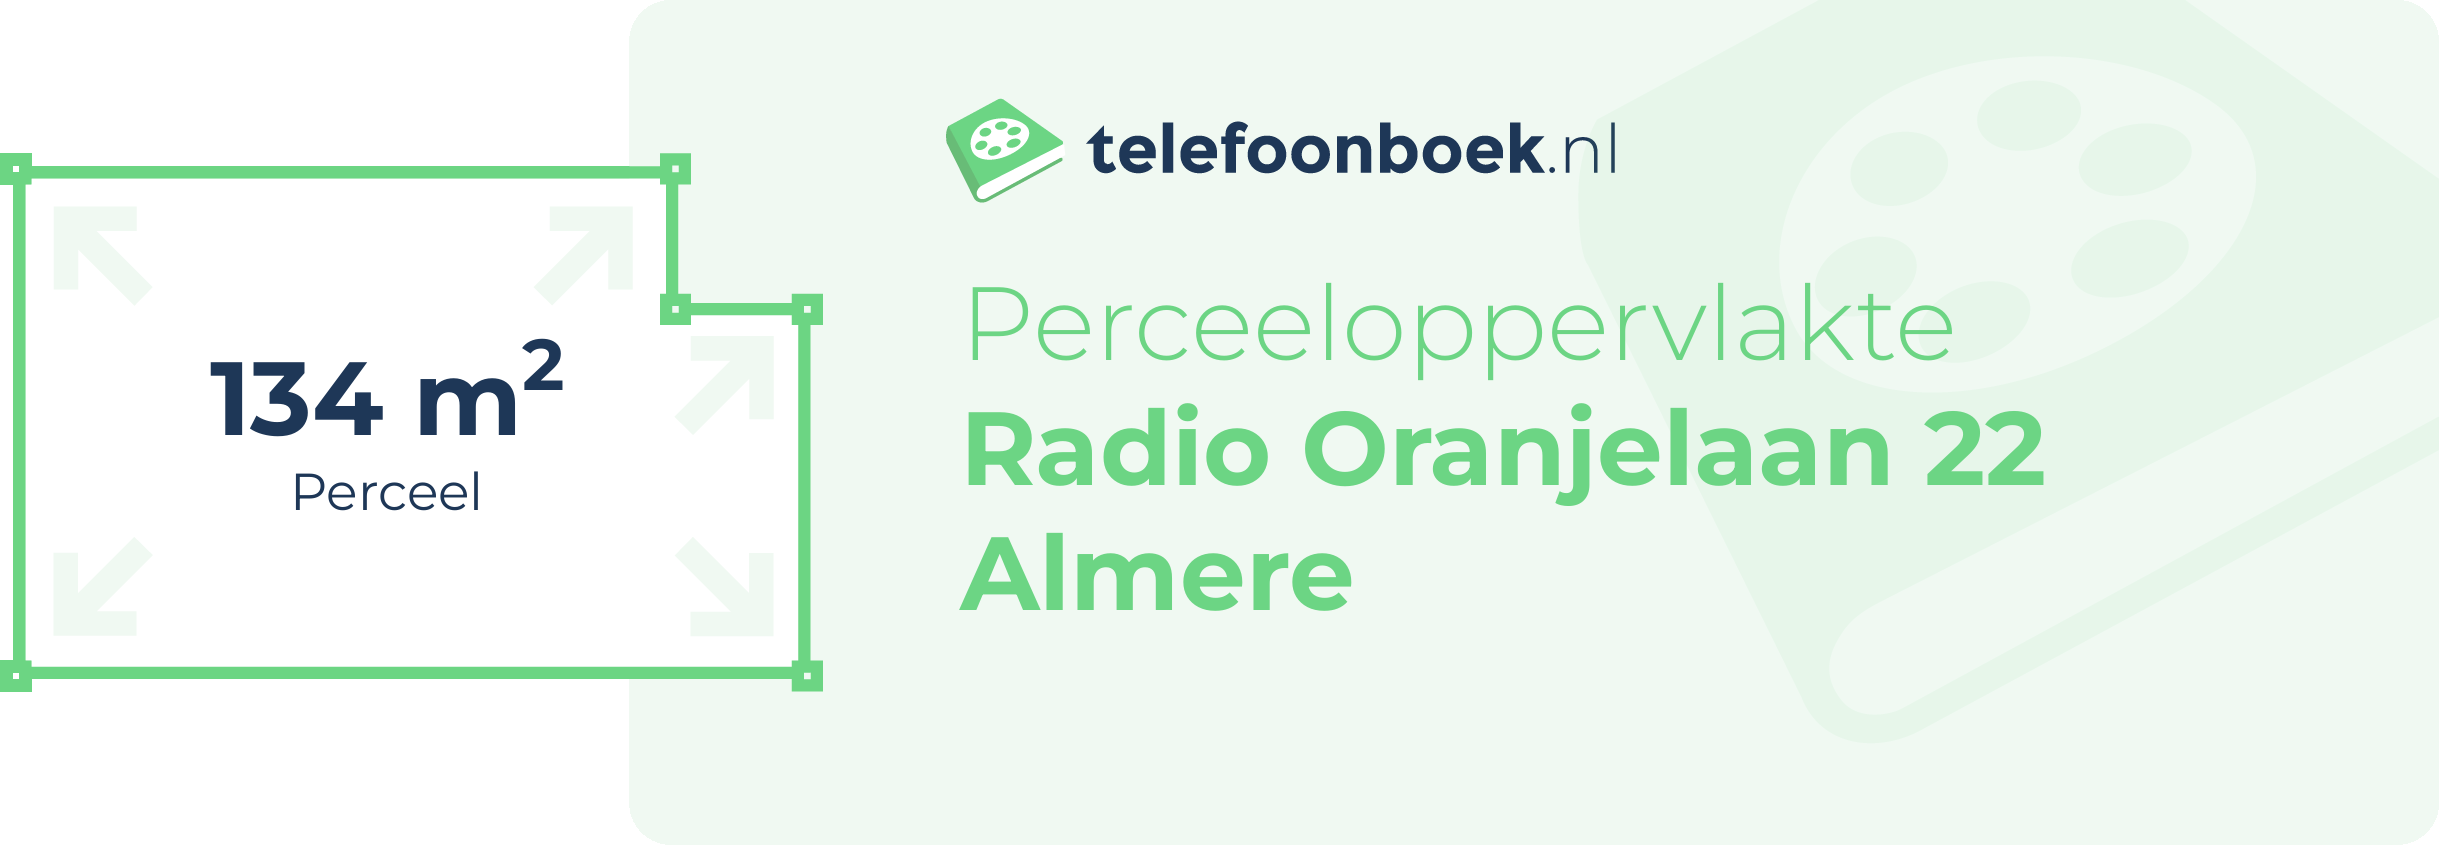 Perceeloppervlakte Radio Oranjelaan 22 Almere